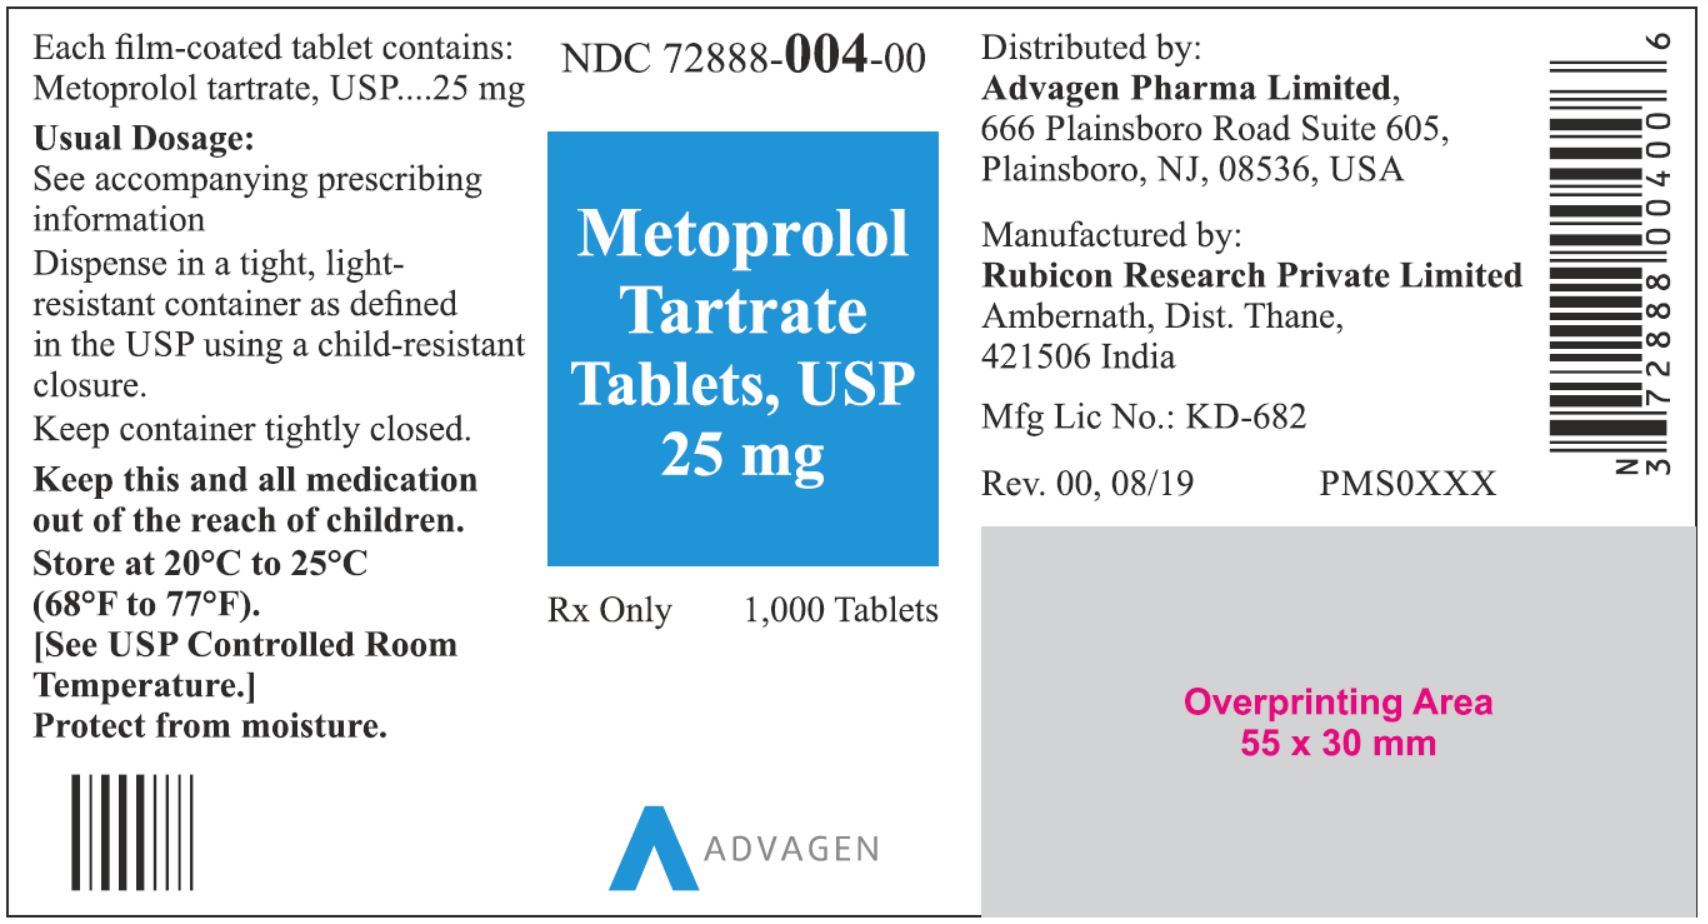 NDC 72888-004-00 - Metoprolol Tartrate Tablets, USP 25 mg - 1000 Tablets